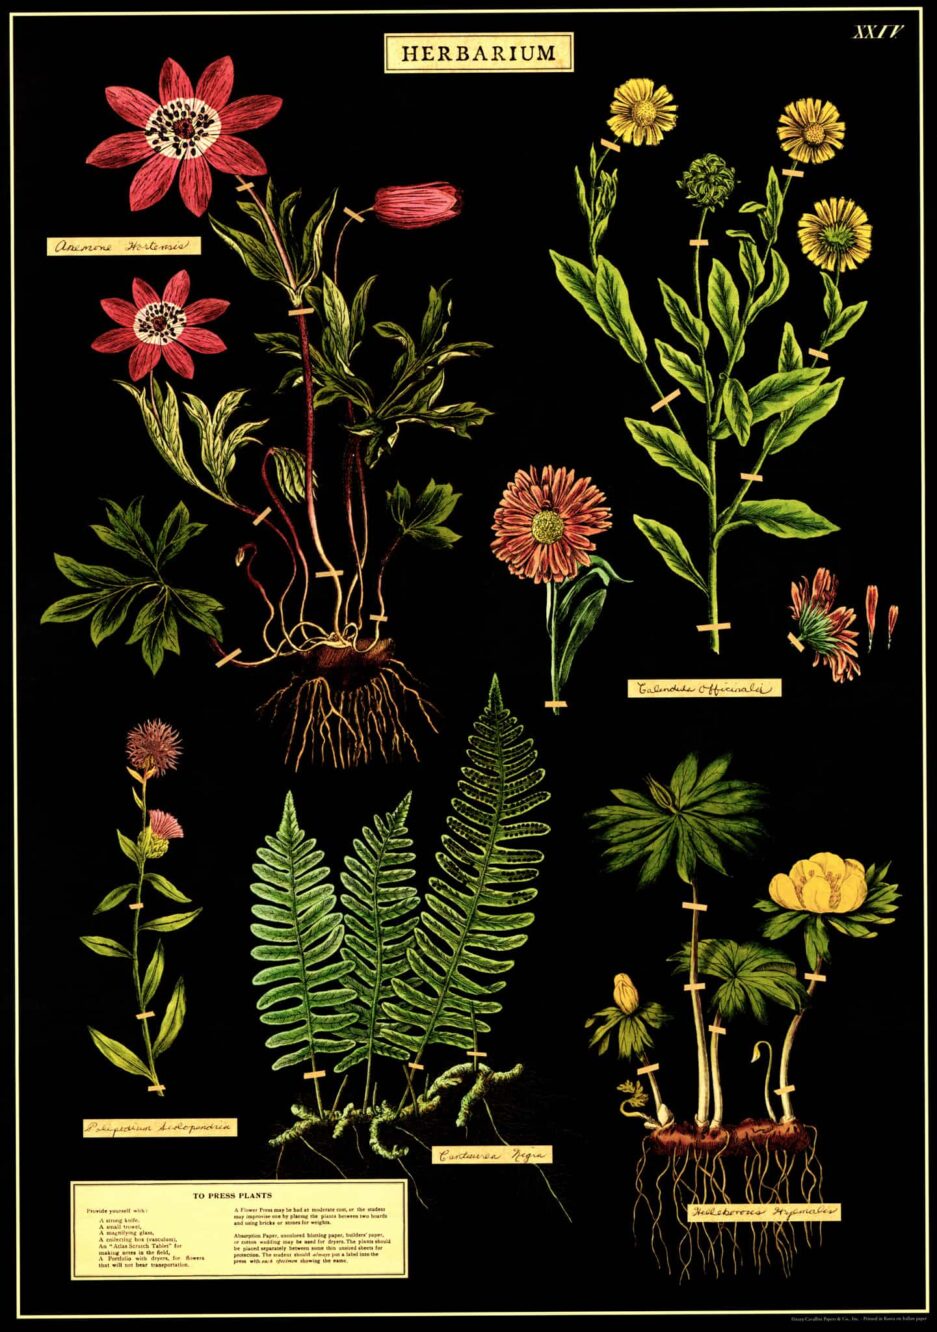 Herbarium vintage poster